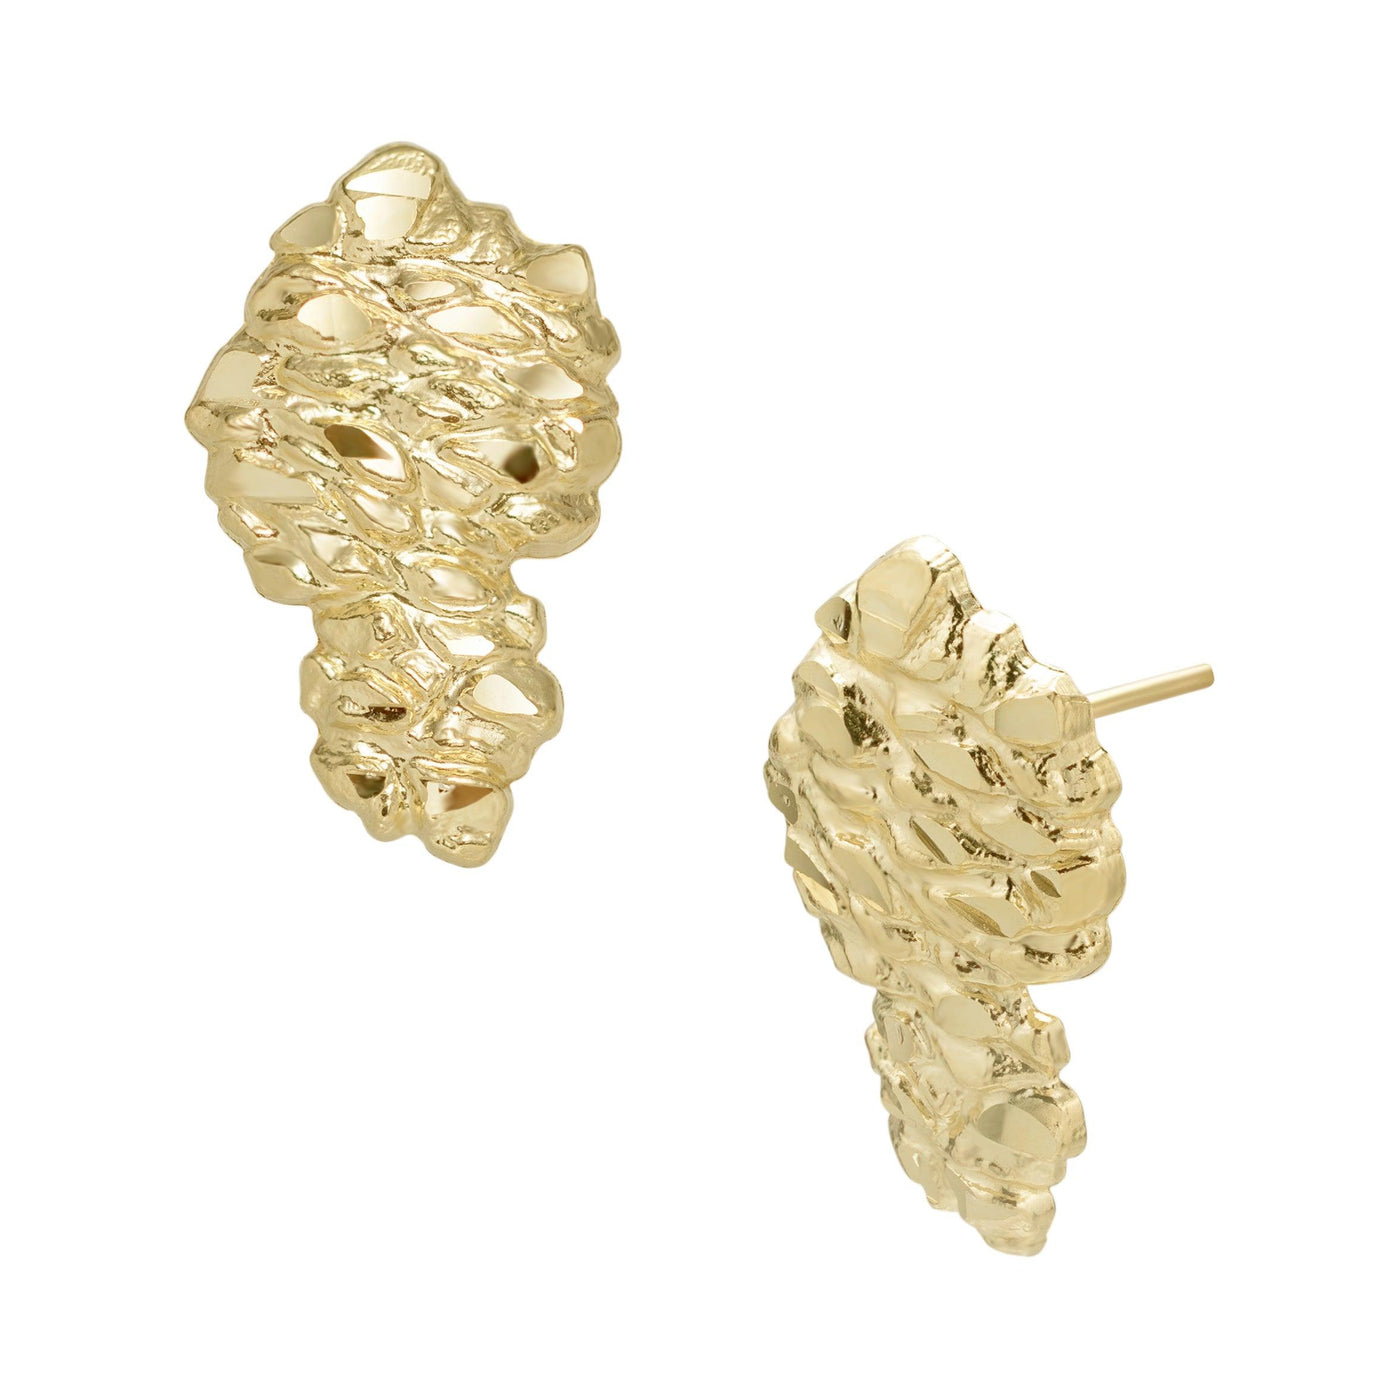 1" Women's Large Nugget Stud Earrings 10K Yellow Gold - bayamjewelry